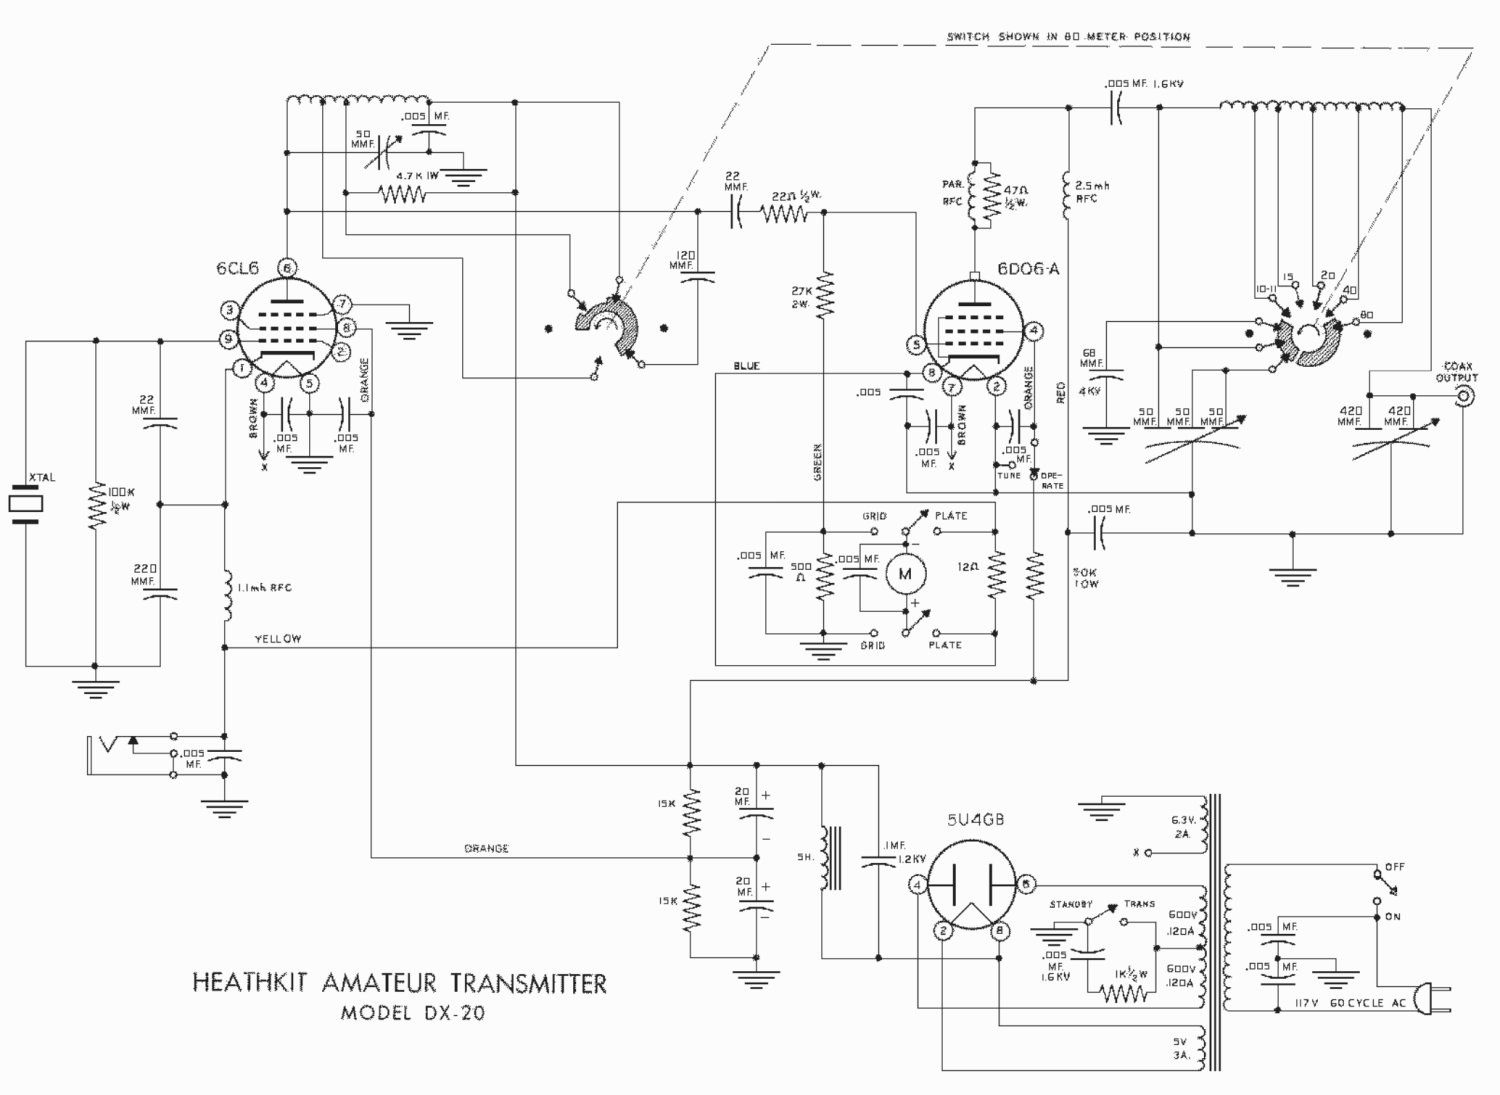 Heathkit DX-20 Amateur Transmitter - Schematic Diagram